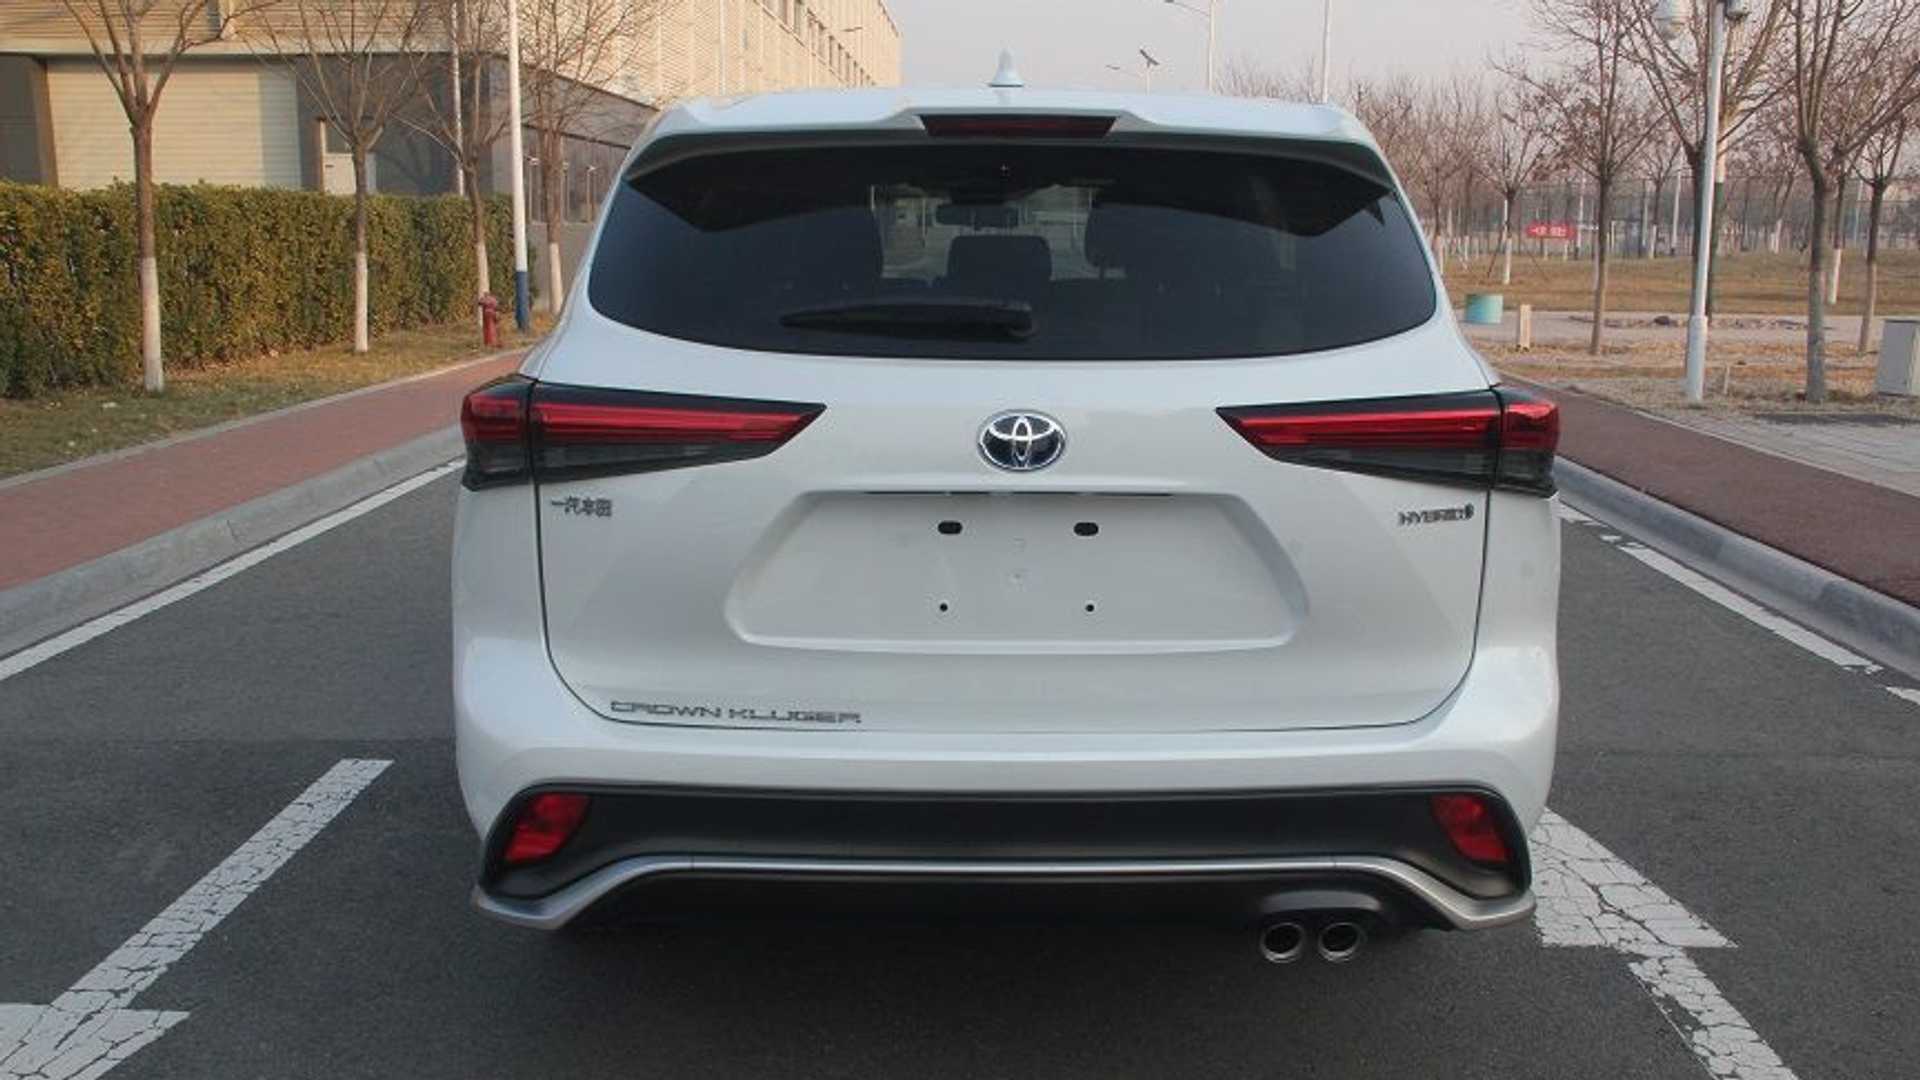 Mặt sau của Toyota Crown Kugler 2022